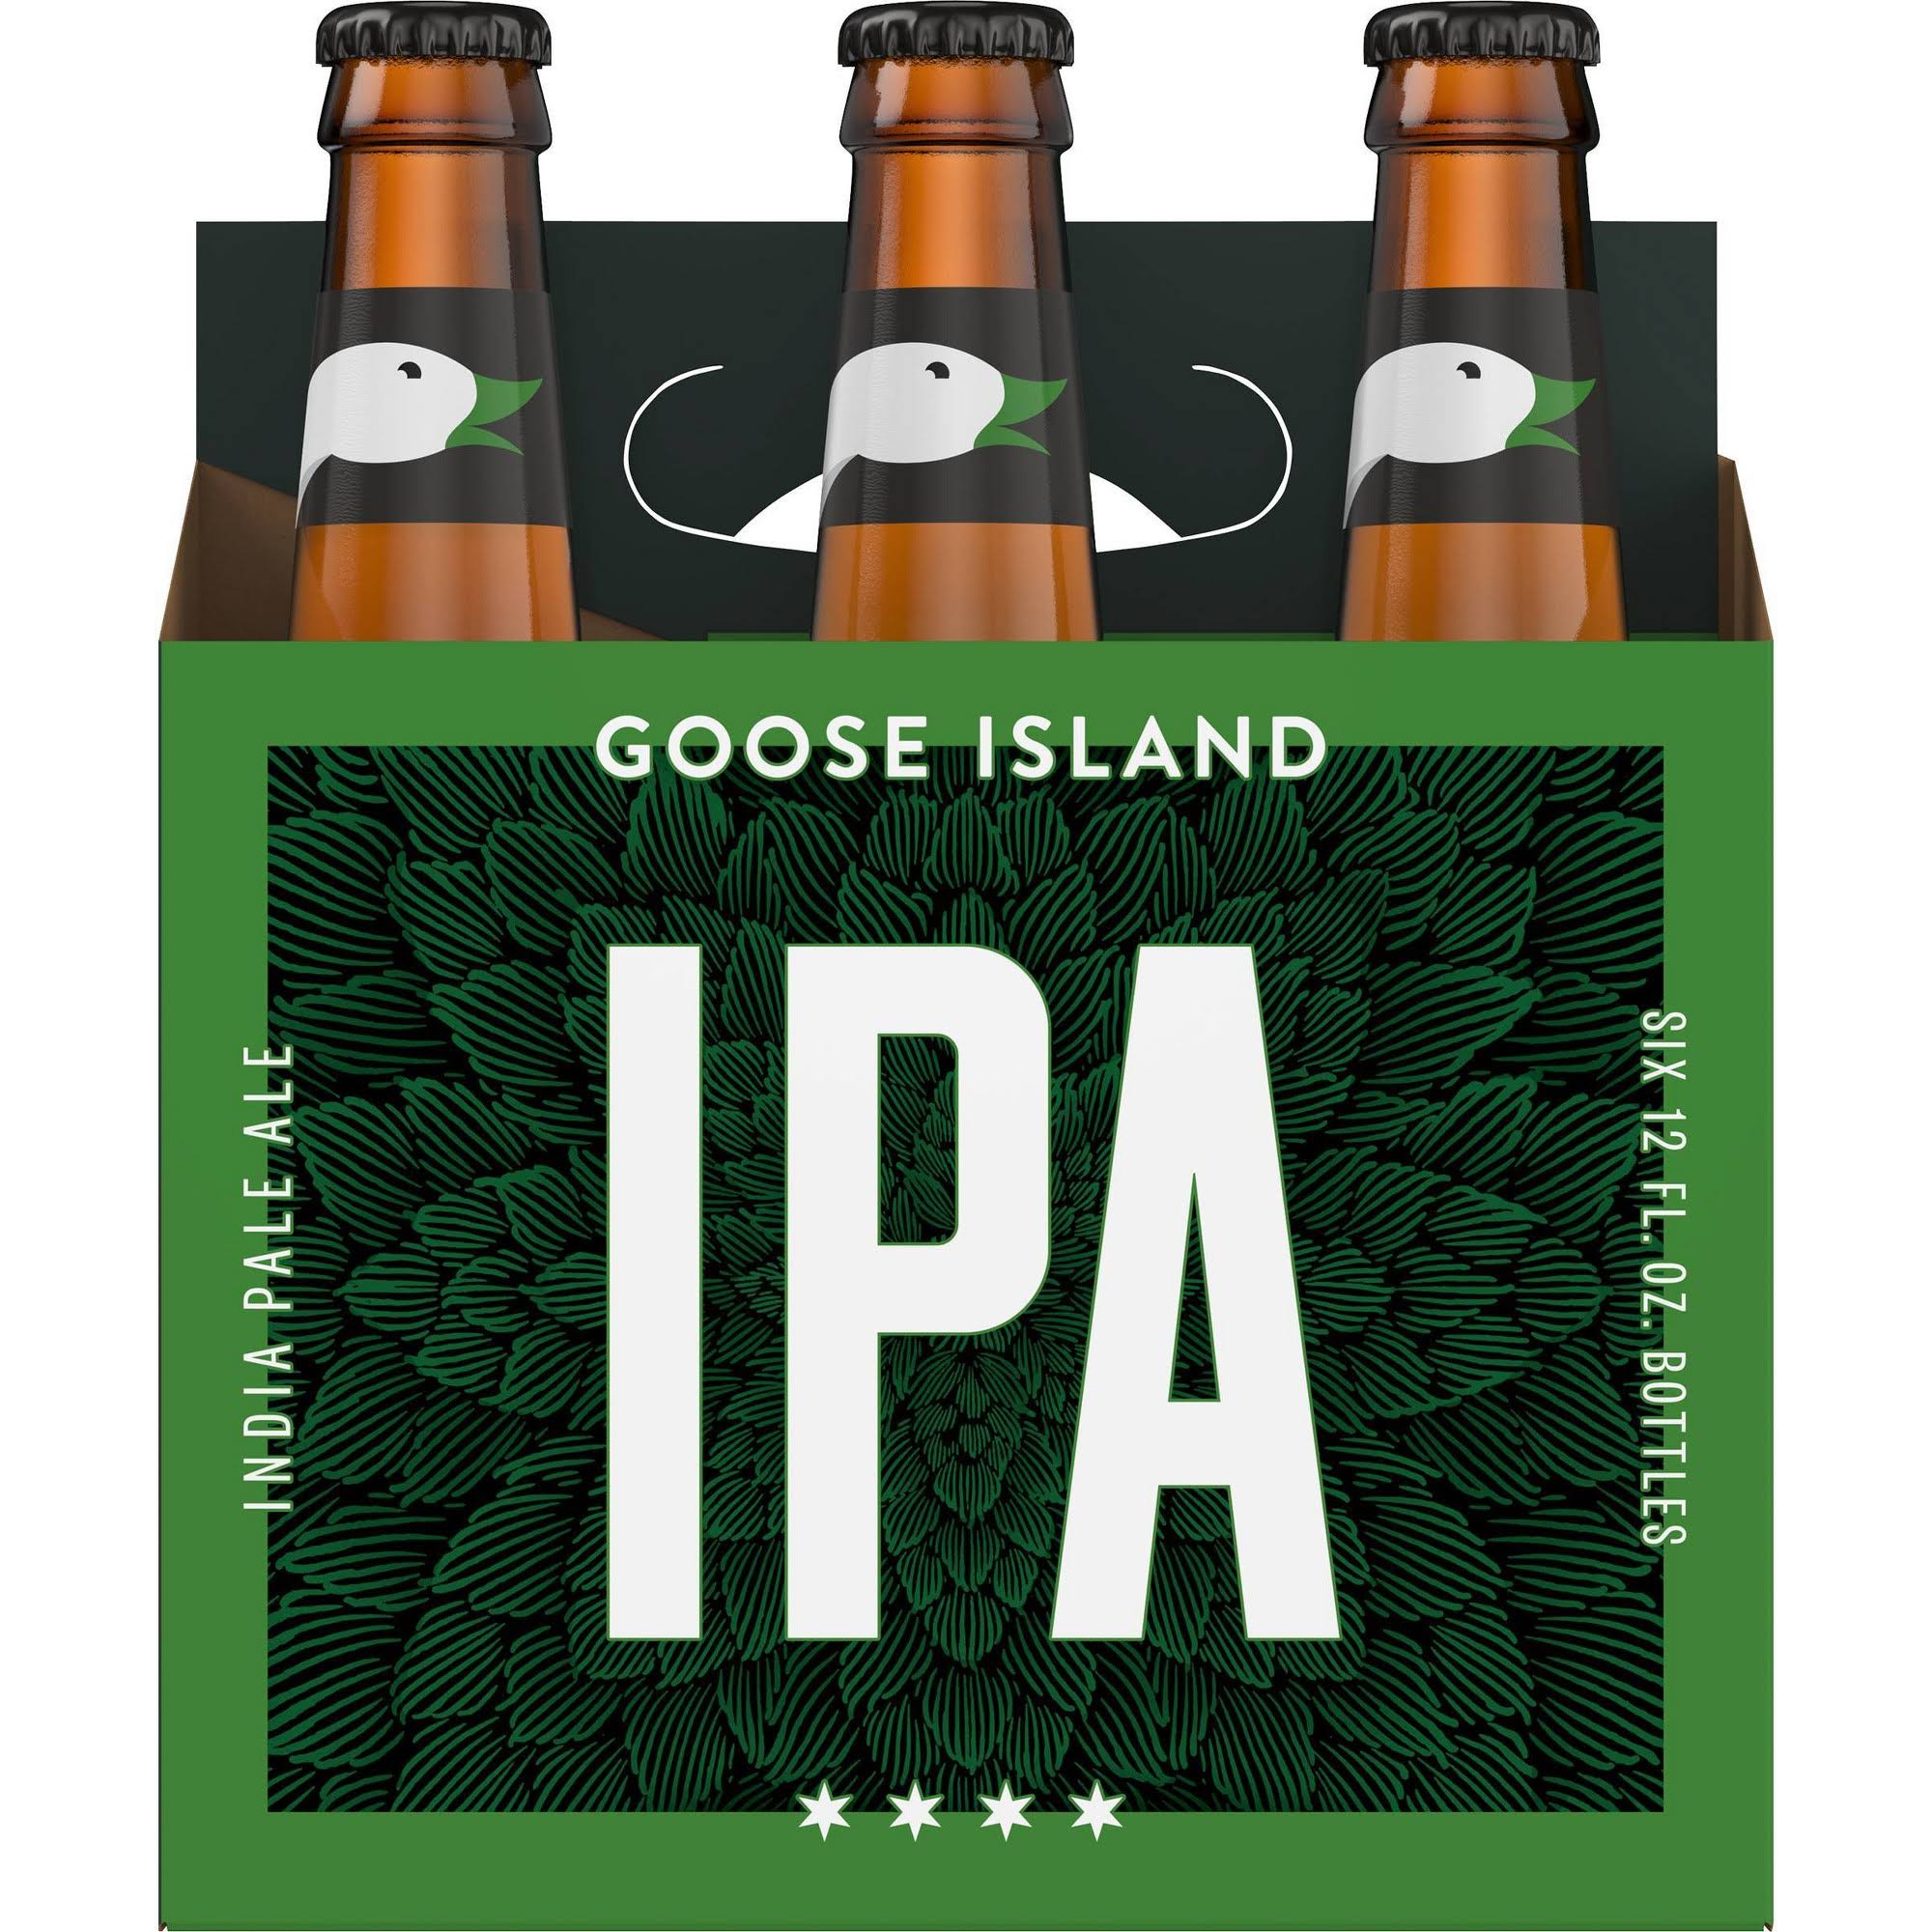 Goose Island India Pale Ale Beer - 12 fl oz, 6 pack